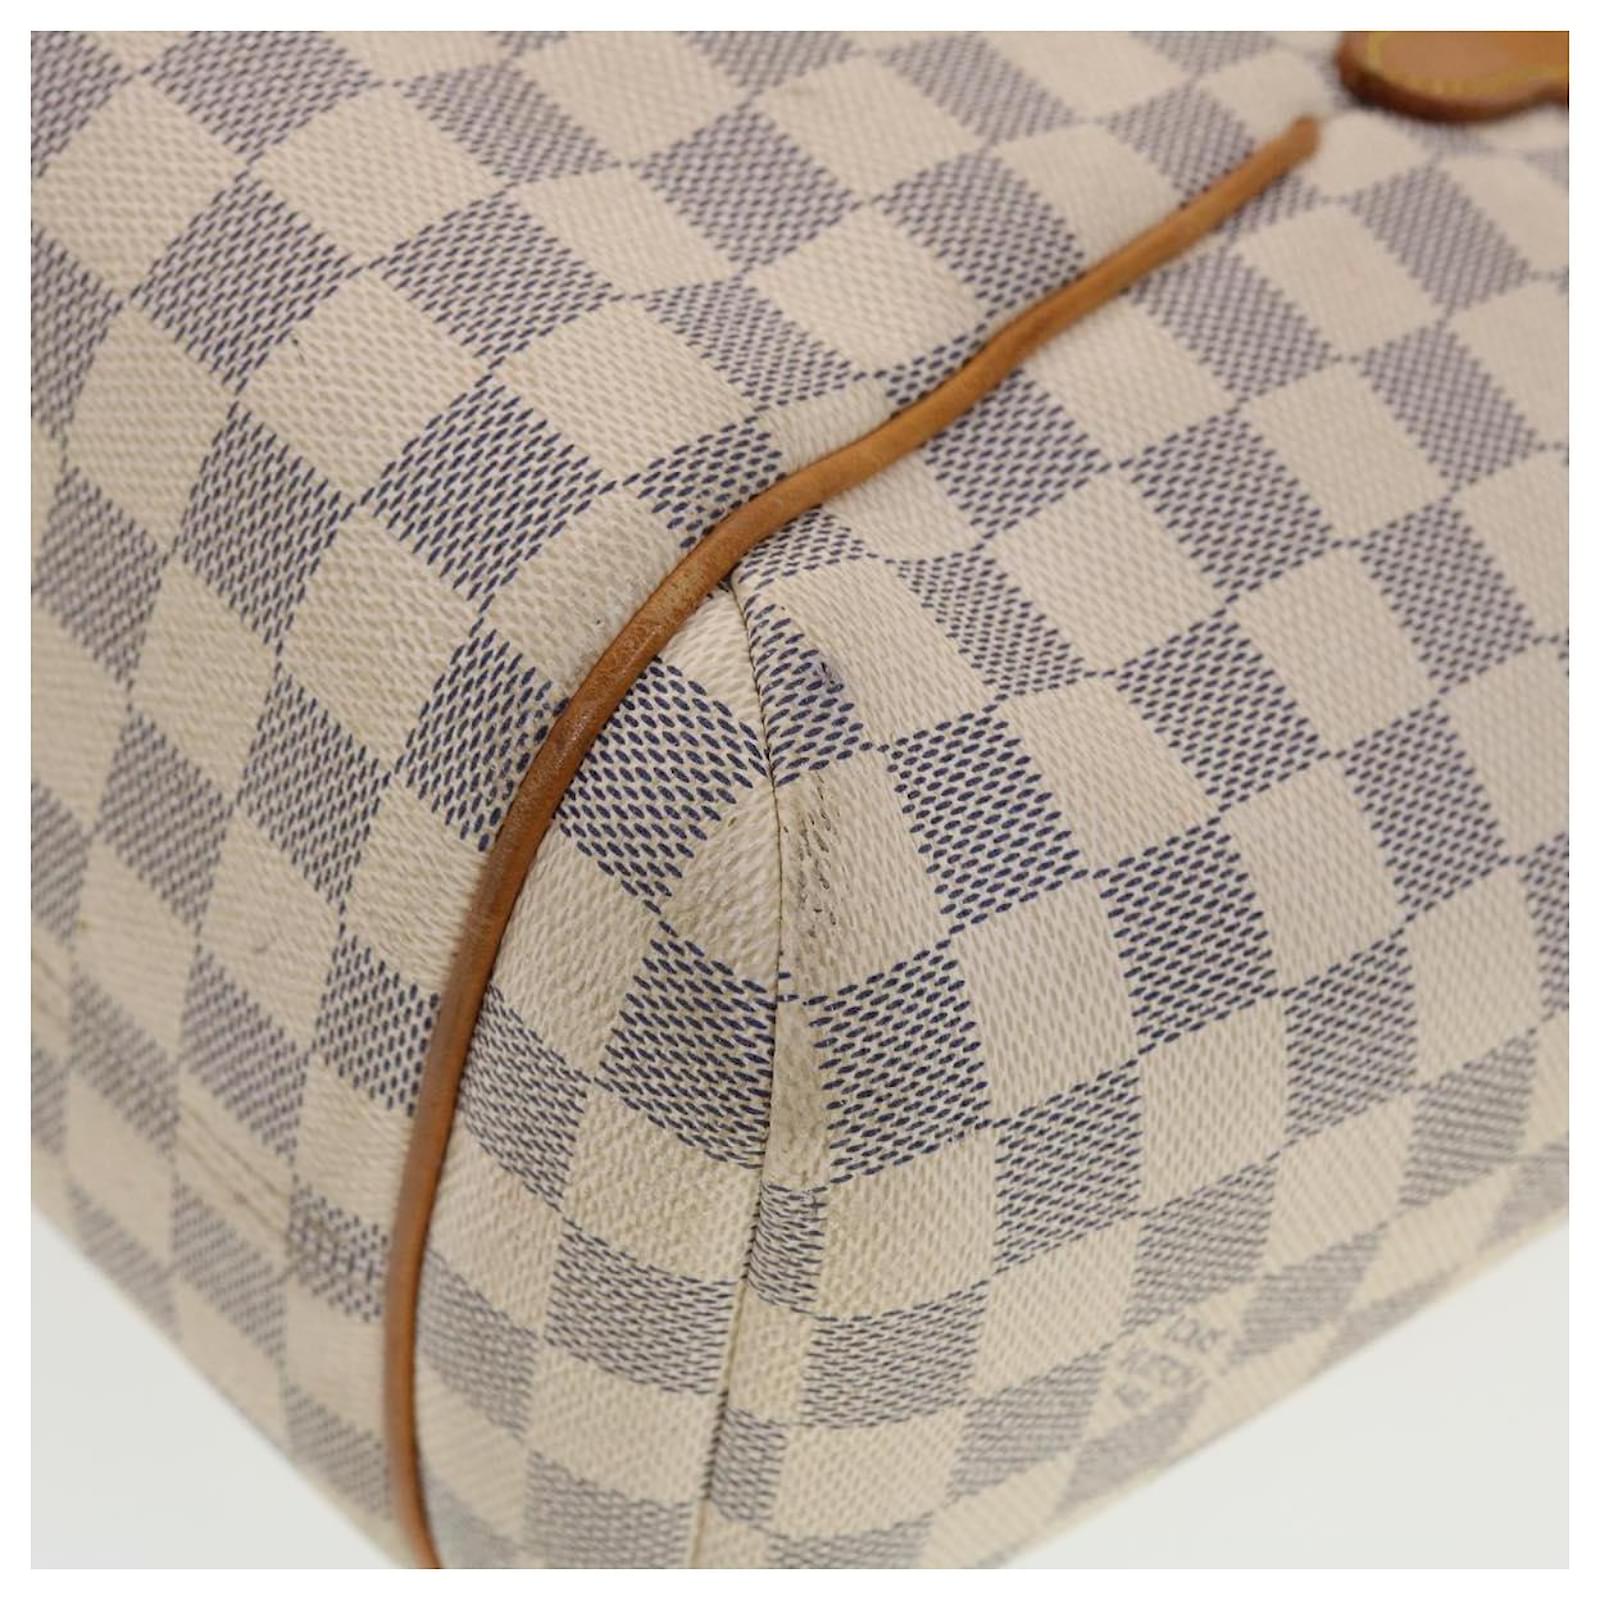 Louis-Vuitton-Damier-Azur-Totally-PM-Tote-Bag-N41280 – dct